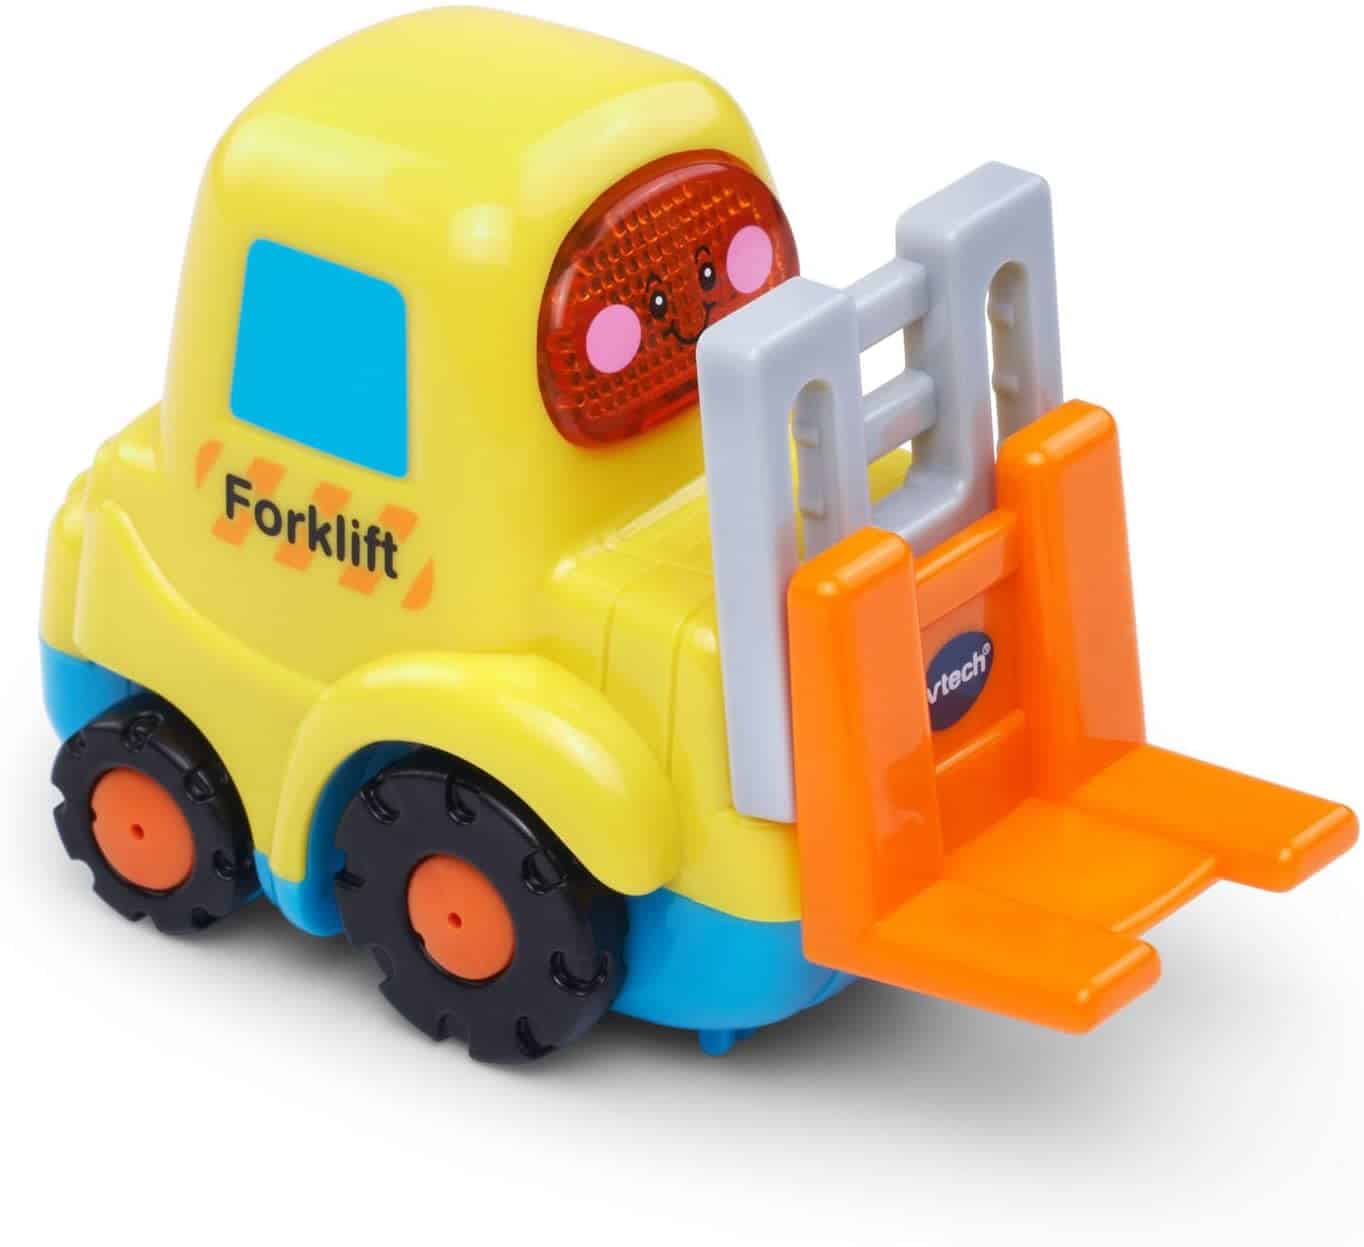 Best Vtech Go Go construction car: Forklift truck